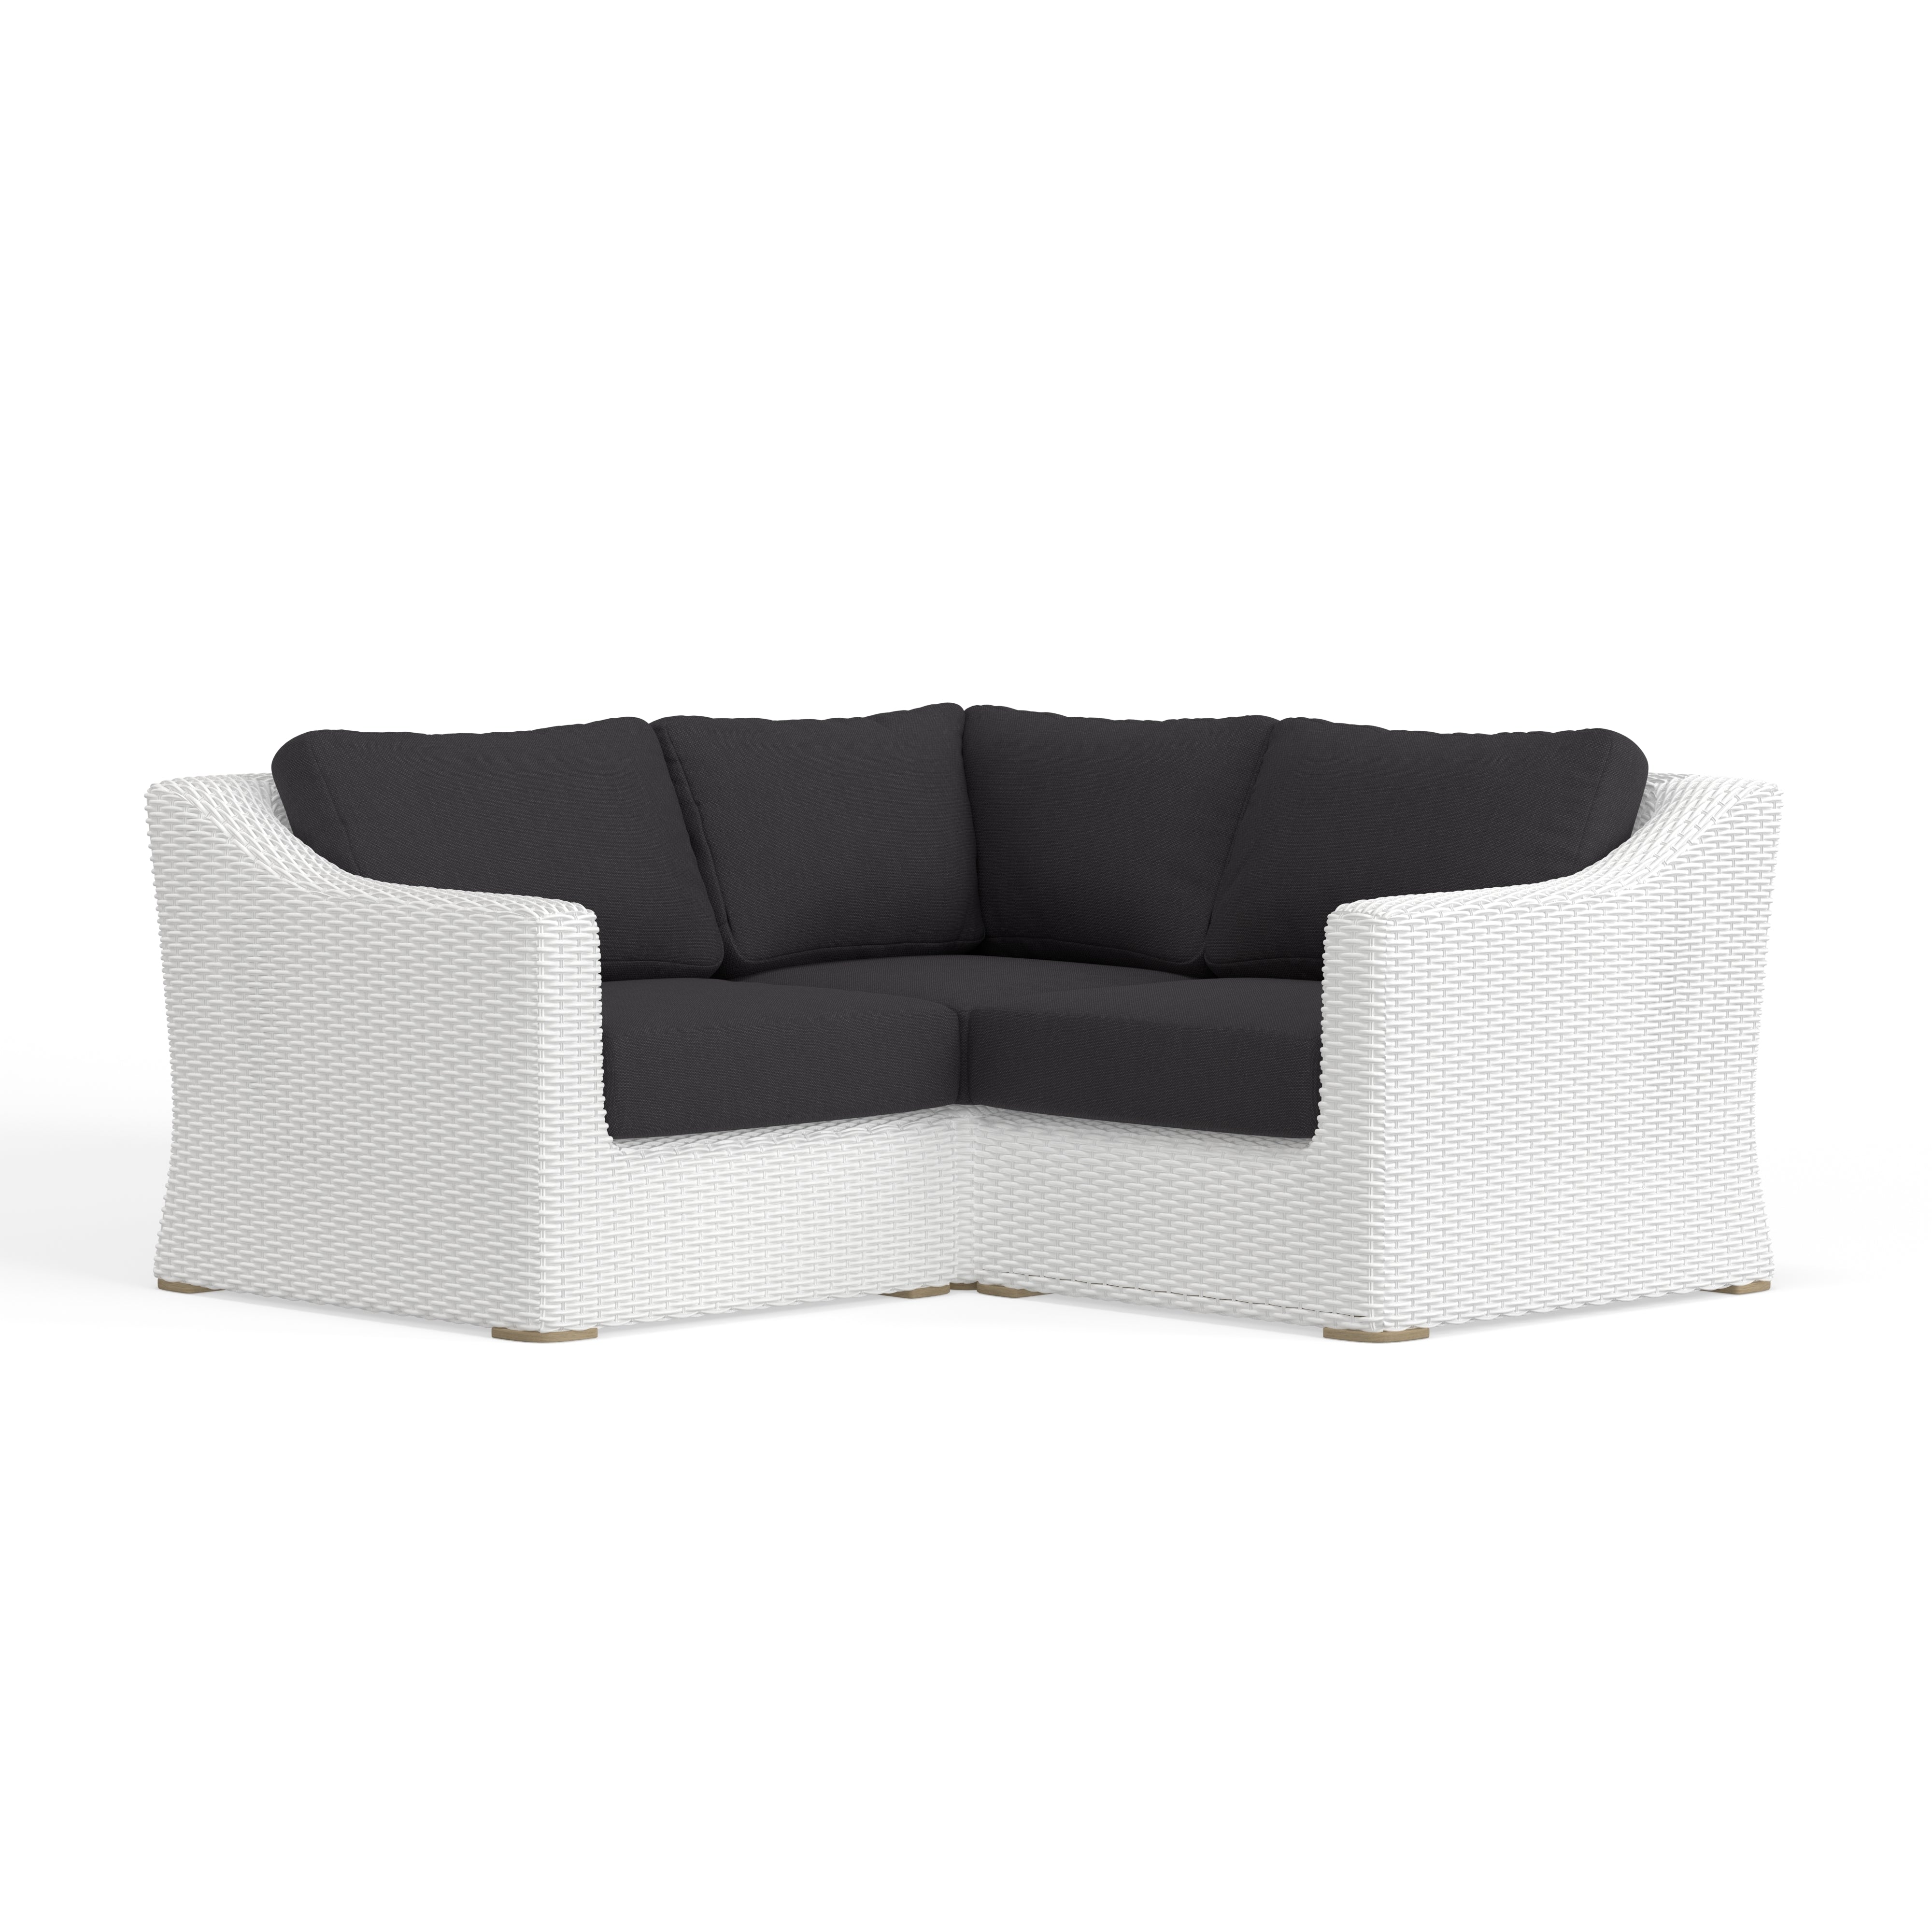 Modular Sofa For Outdoors